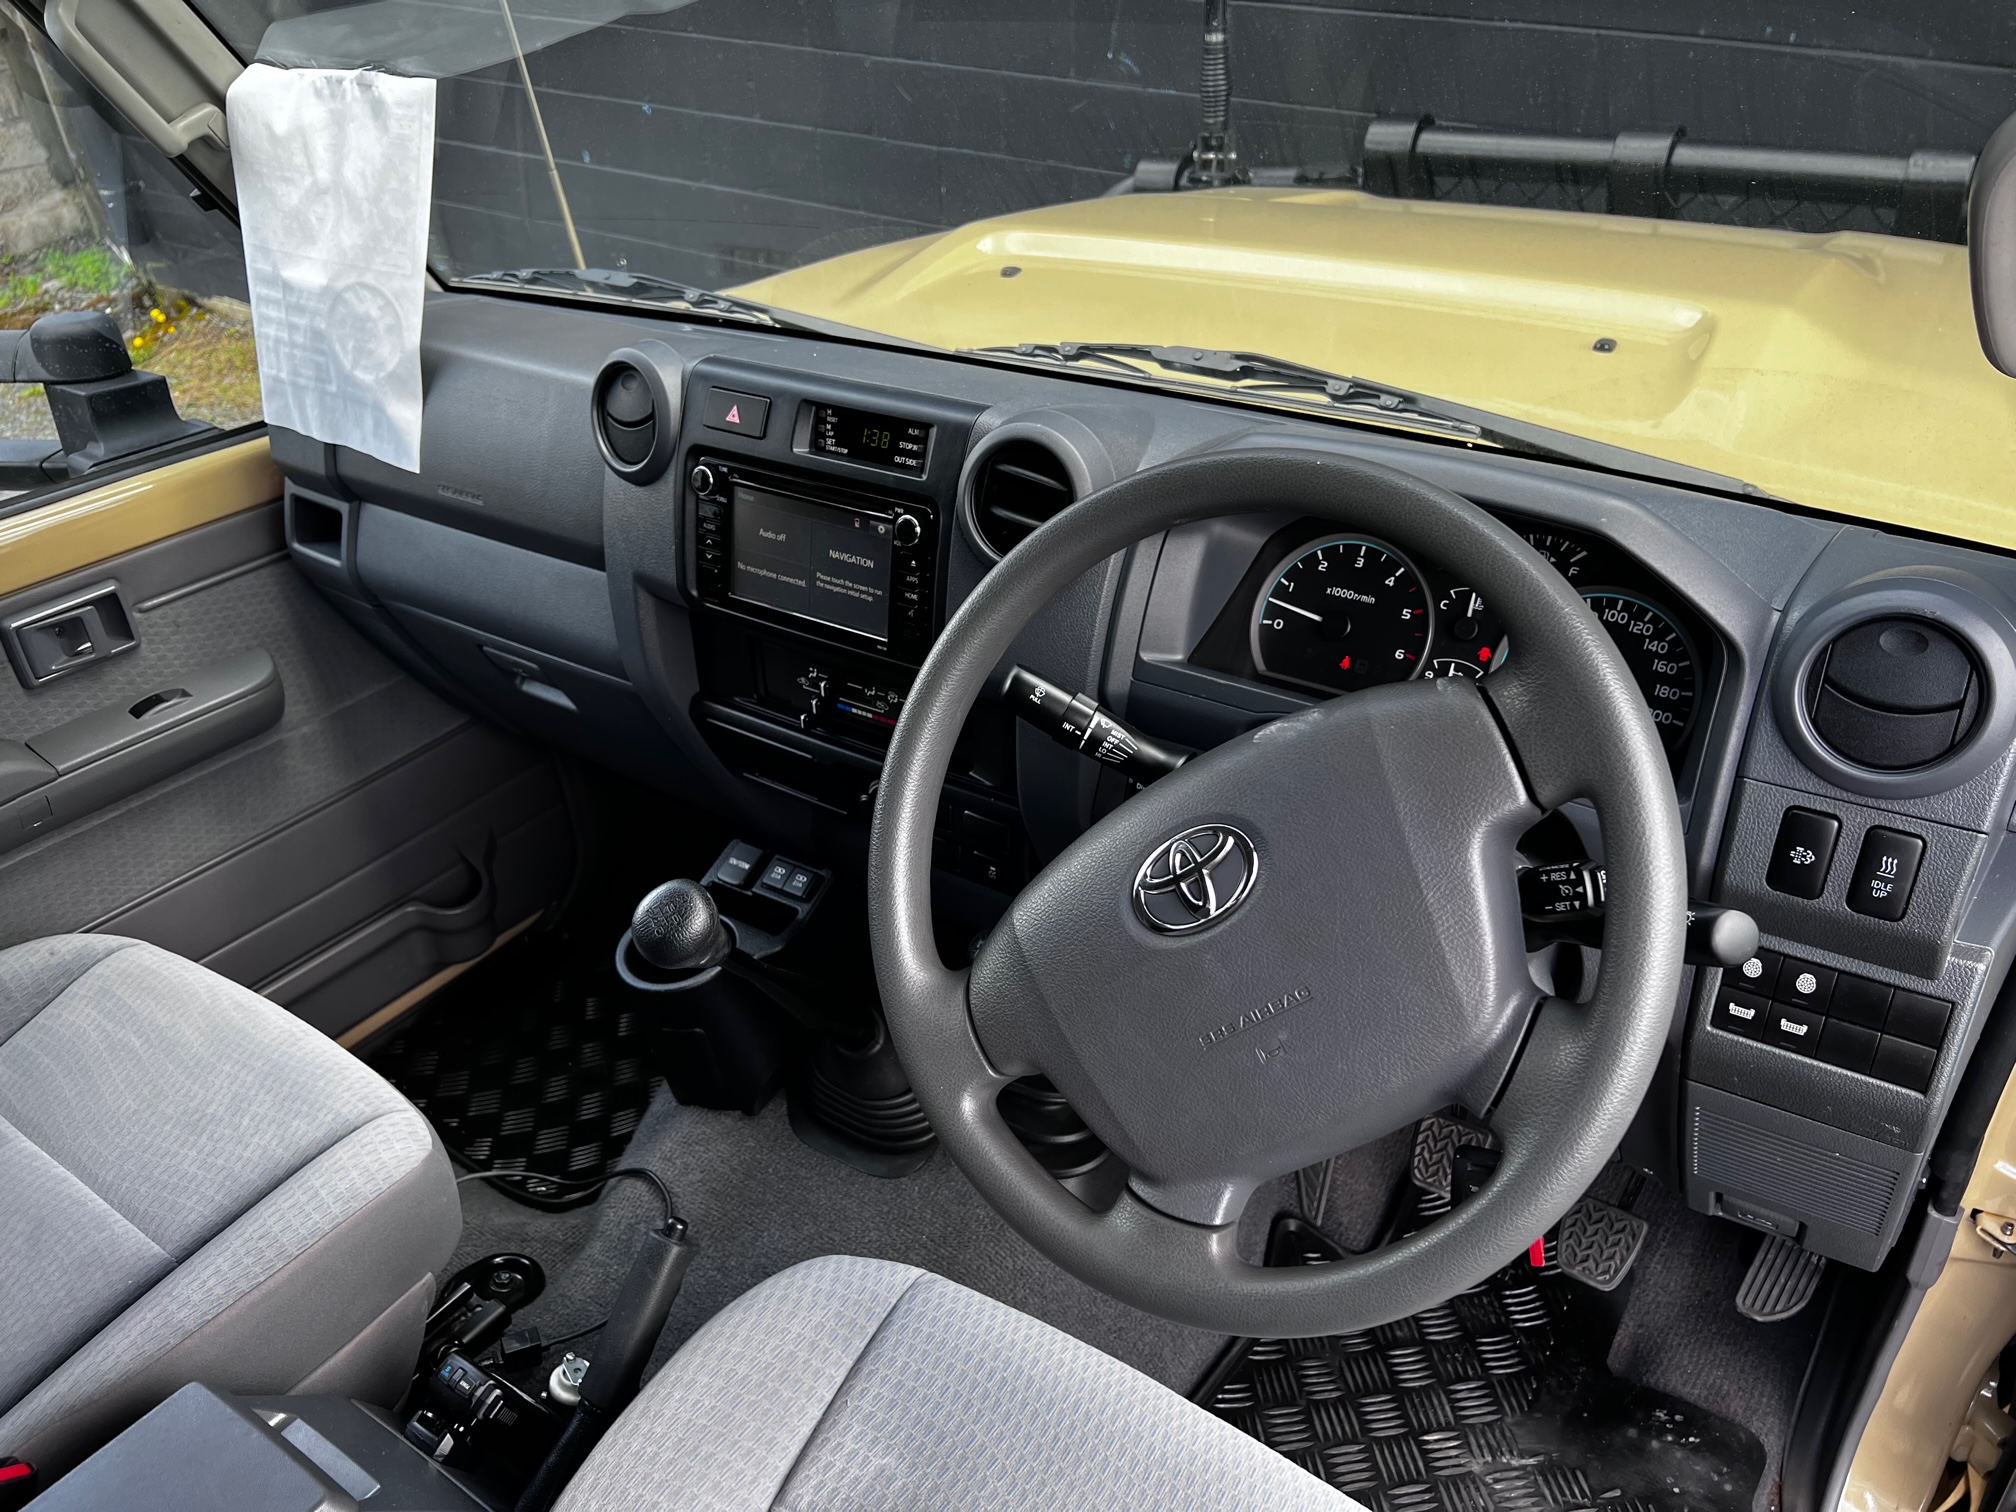 Toyota Landcruiser GXL 2020 Image 13